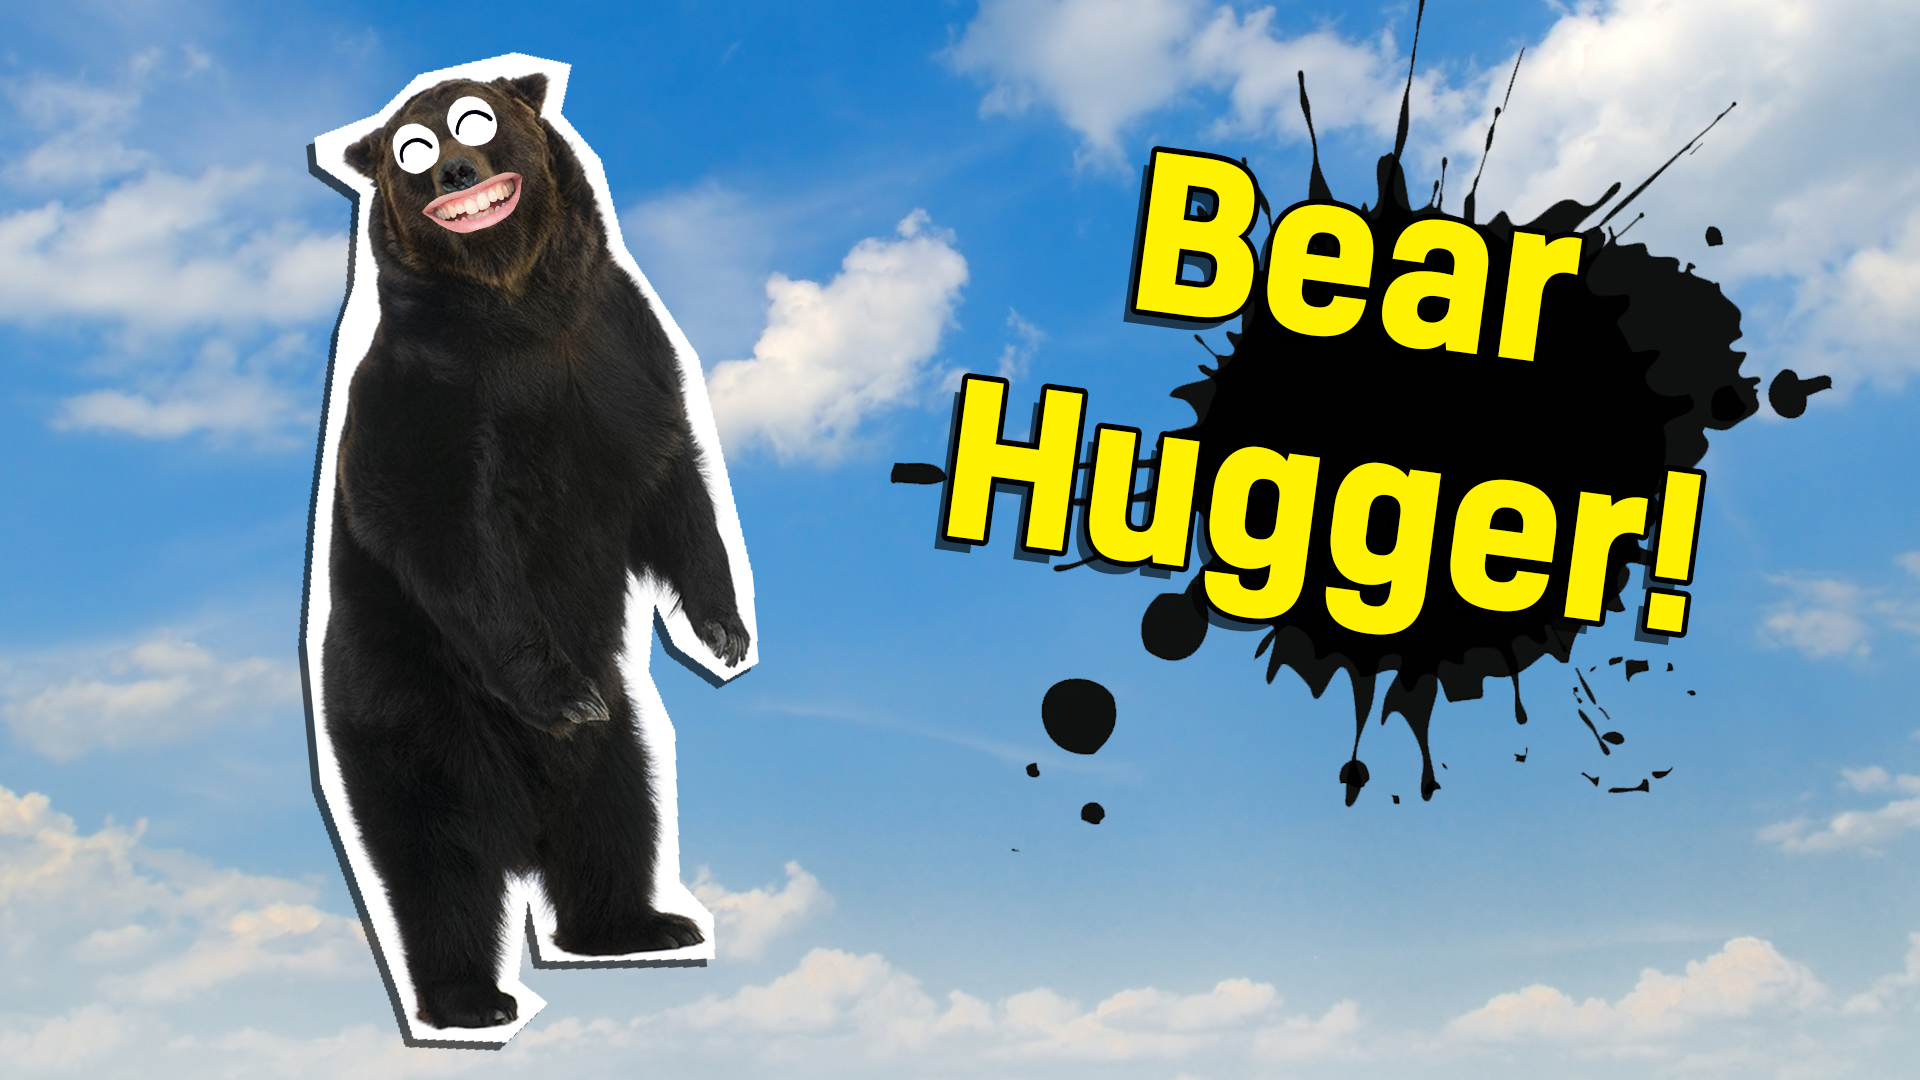 The bear hugger!